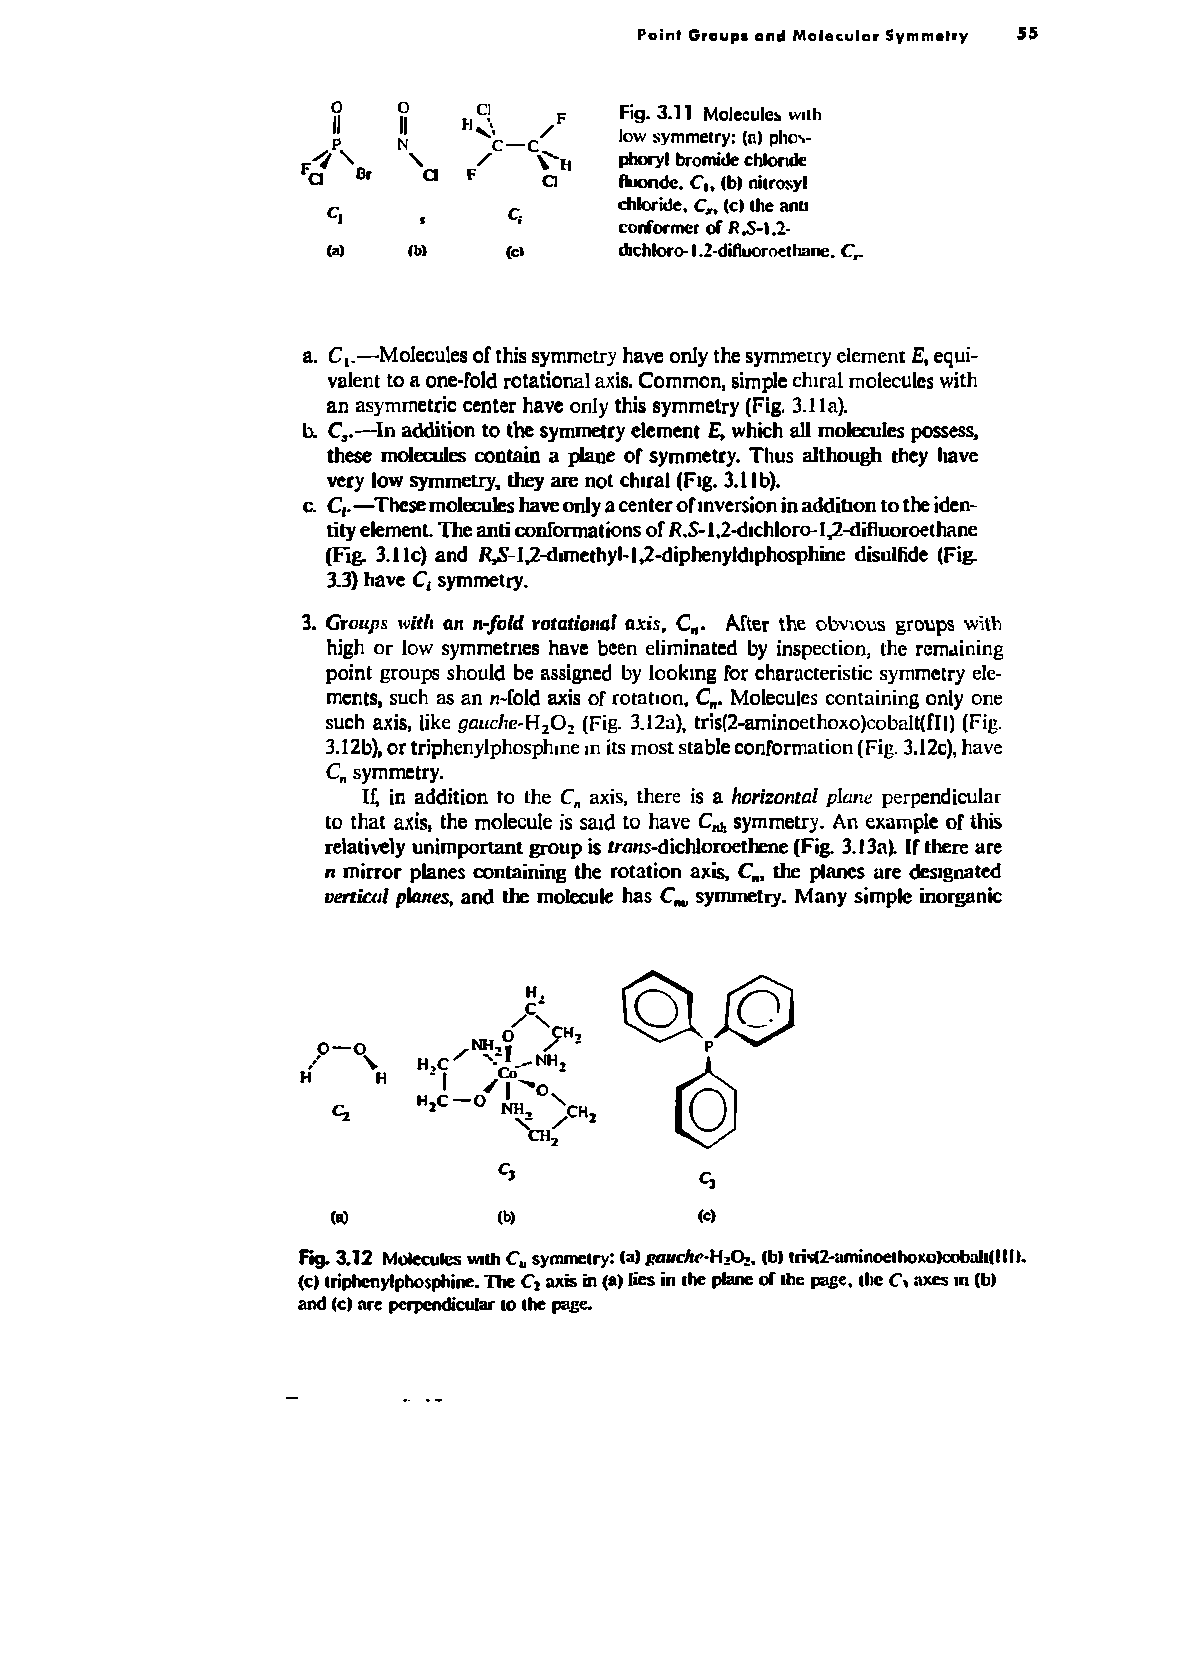 Fig. 3.11 Molecules with low symmetry (n) plicv pboryl bromide chloride fhiondc. C, (b nitrosyl chloride. C (c) the anu conformer of R.S-1.2-dichloro-l.2-difluoroethane.